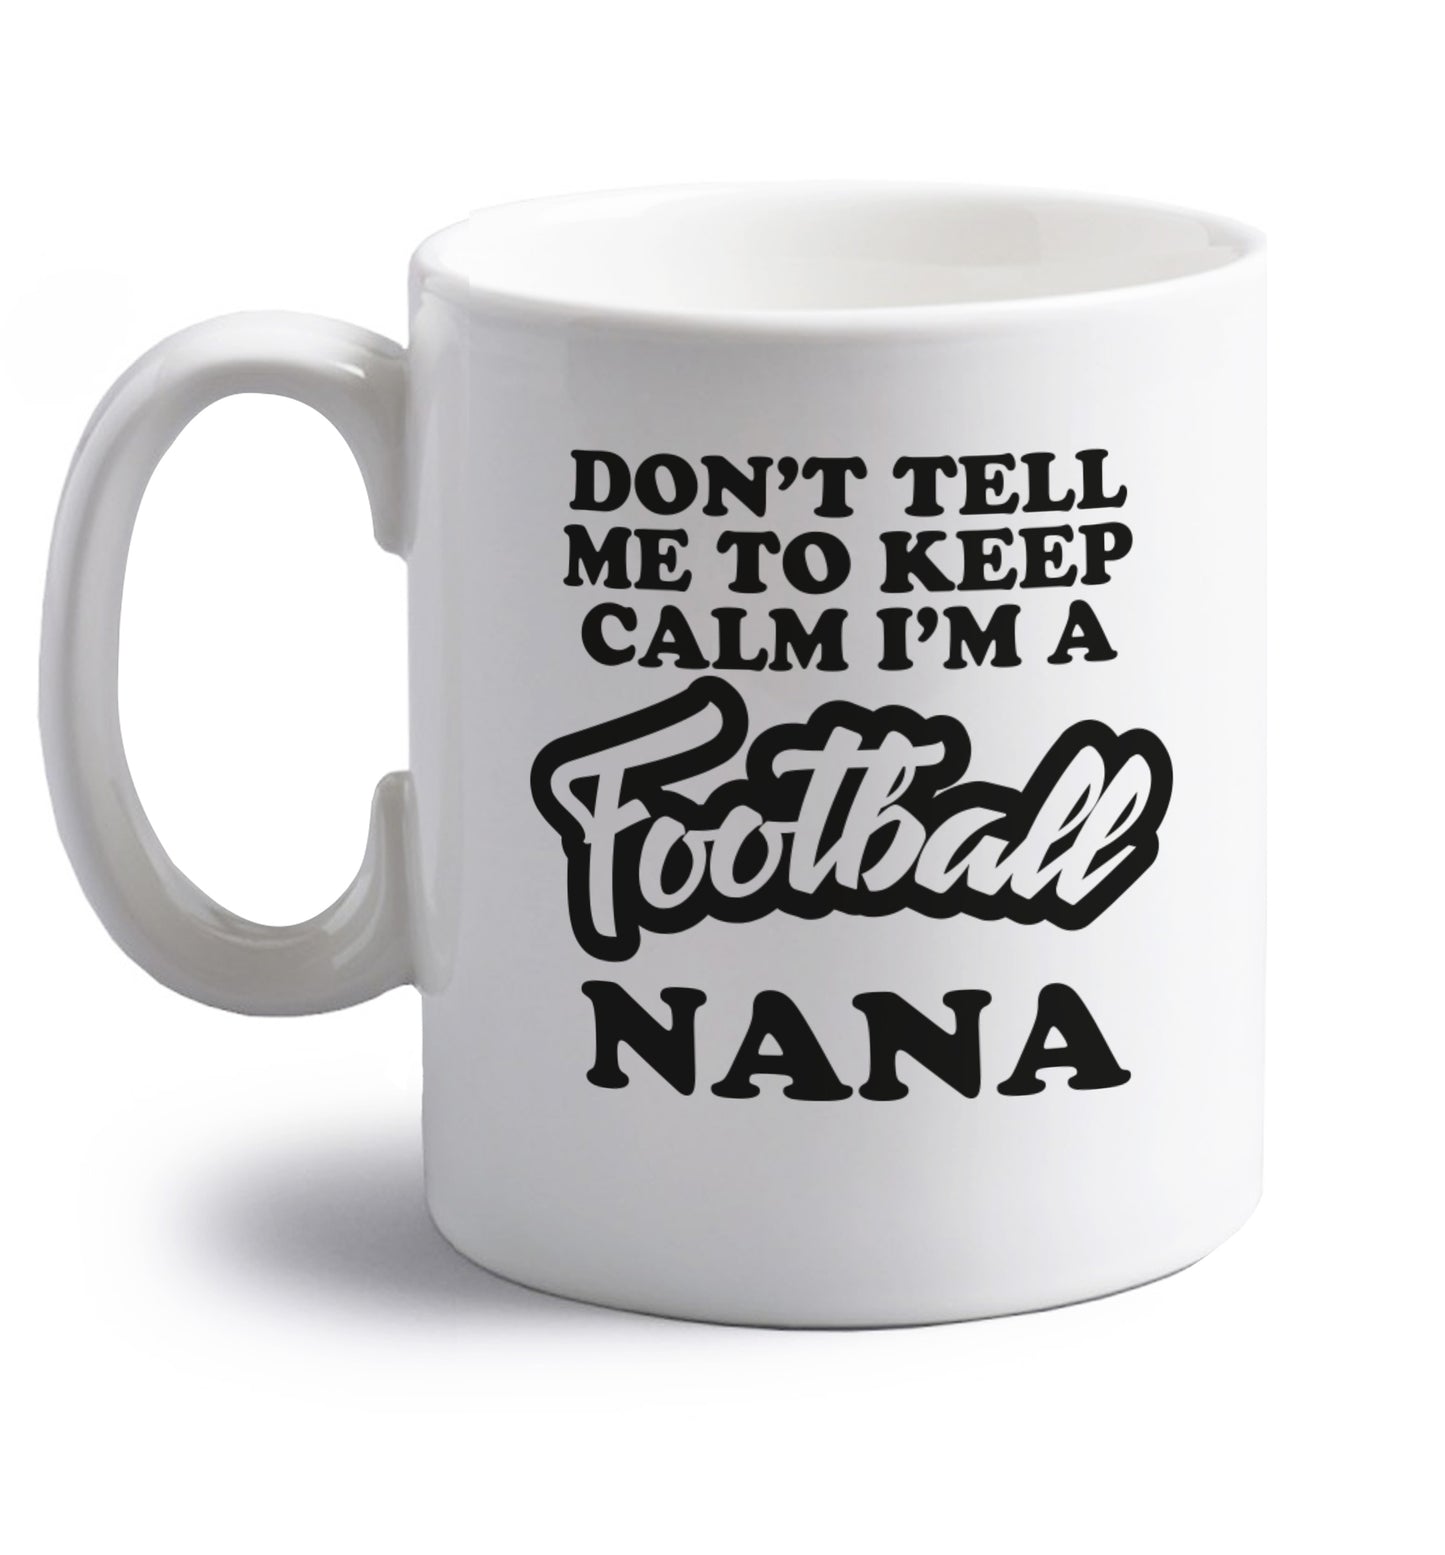 Don't tell me to keep calm I'm a football nana right handed white ceramic mug 